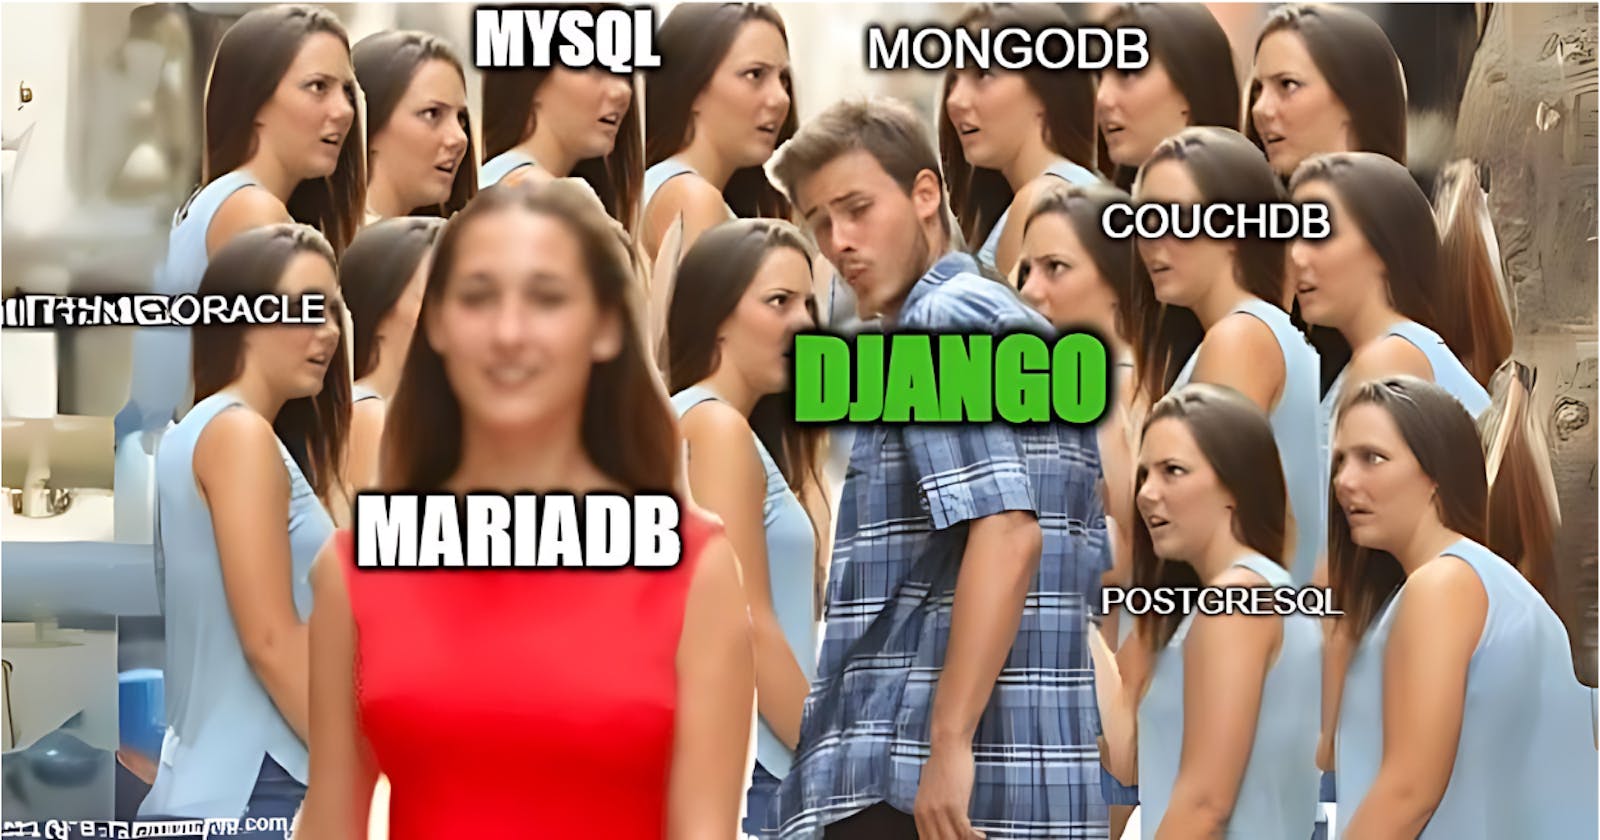 Handling Multiple Databases in Django